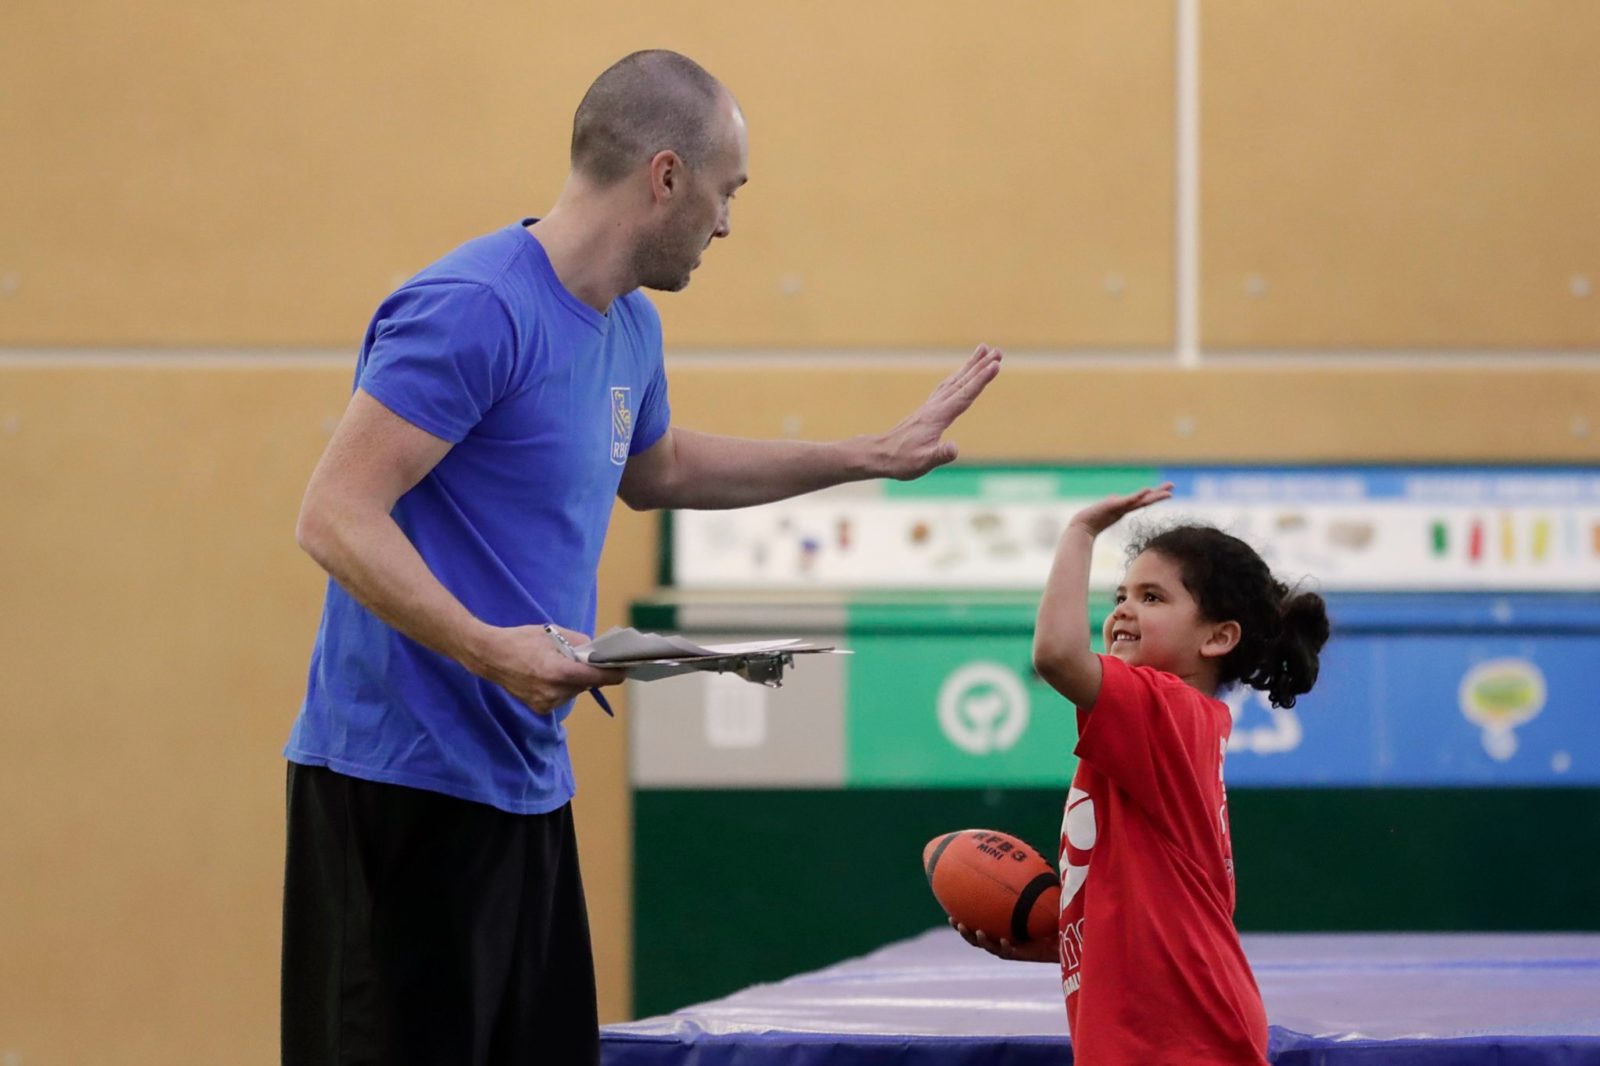 KidSport Volunteer high fives young child